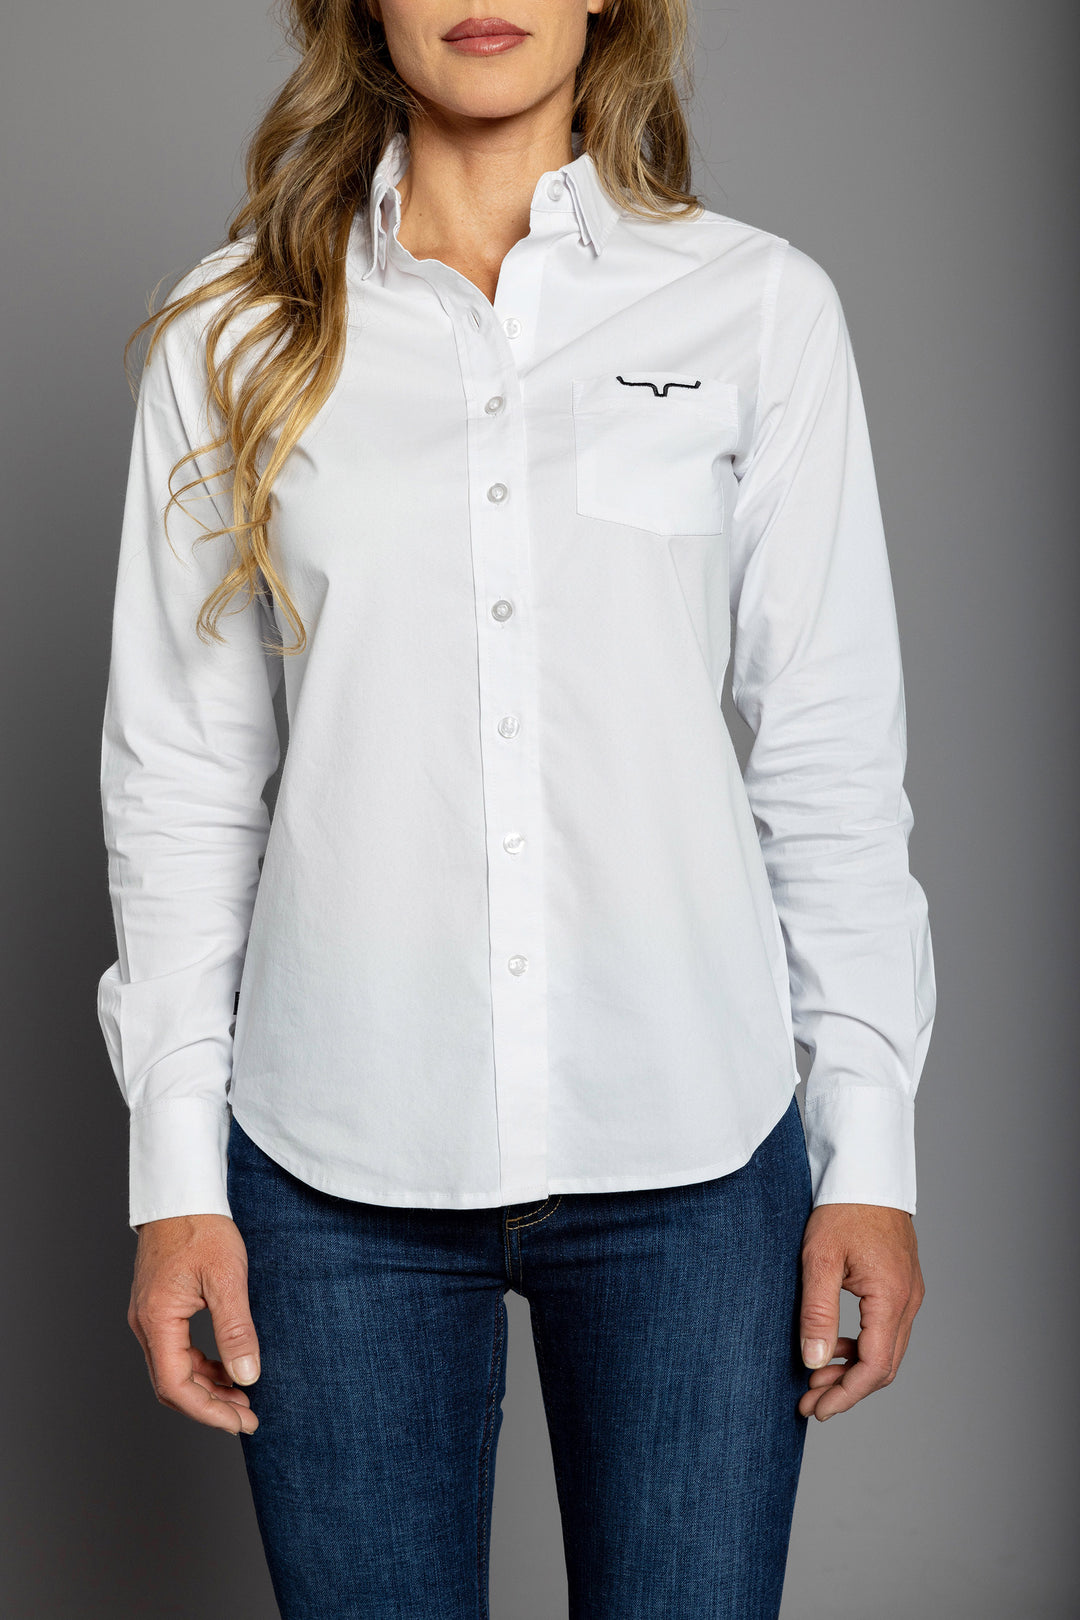 Kimes Ranch Women's White Long Team Shirt